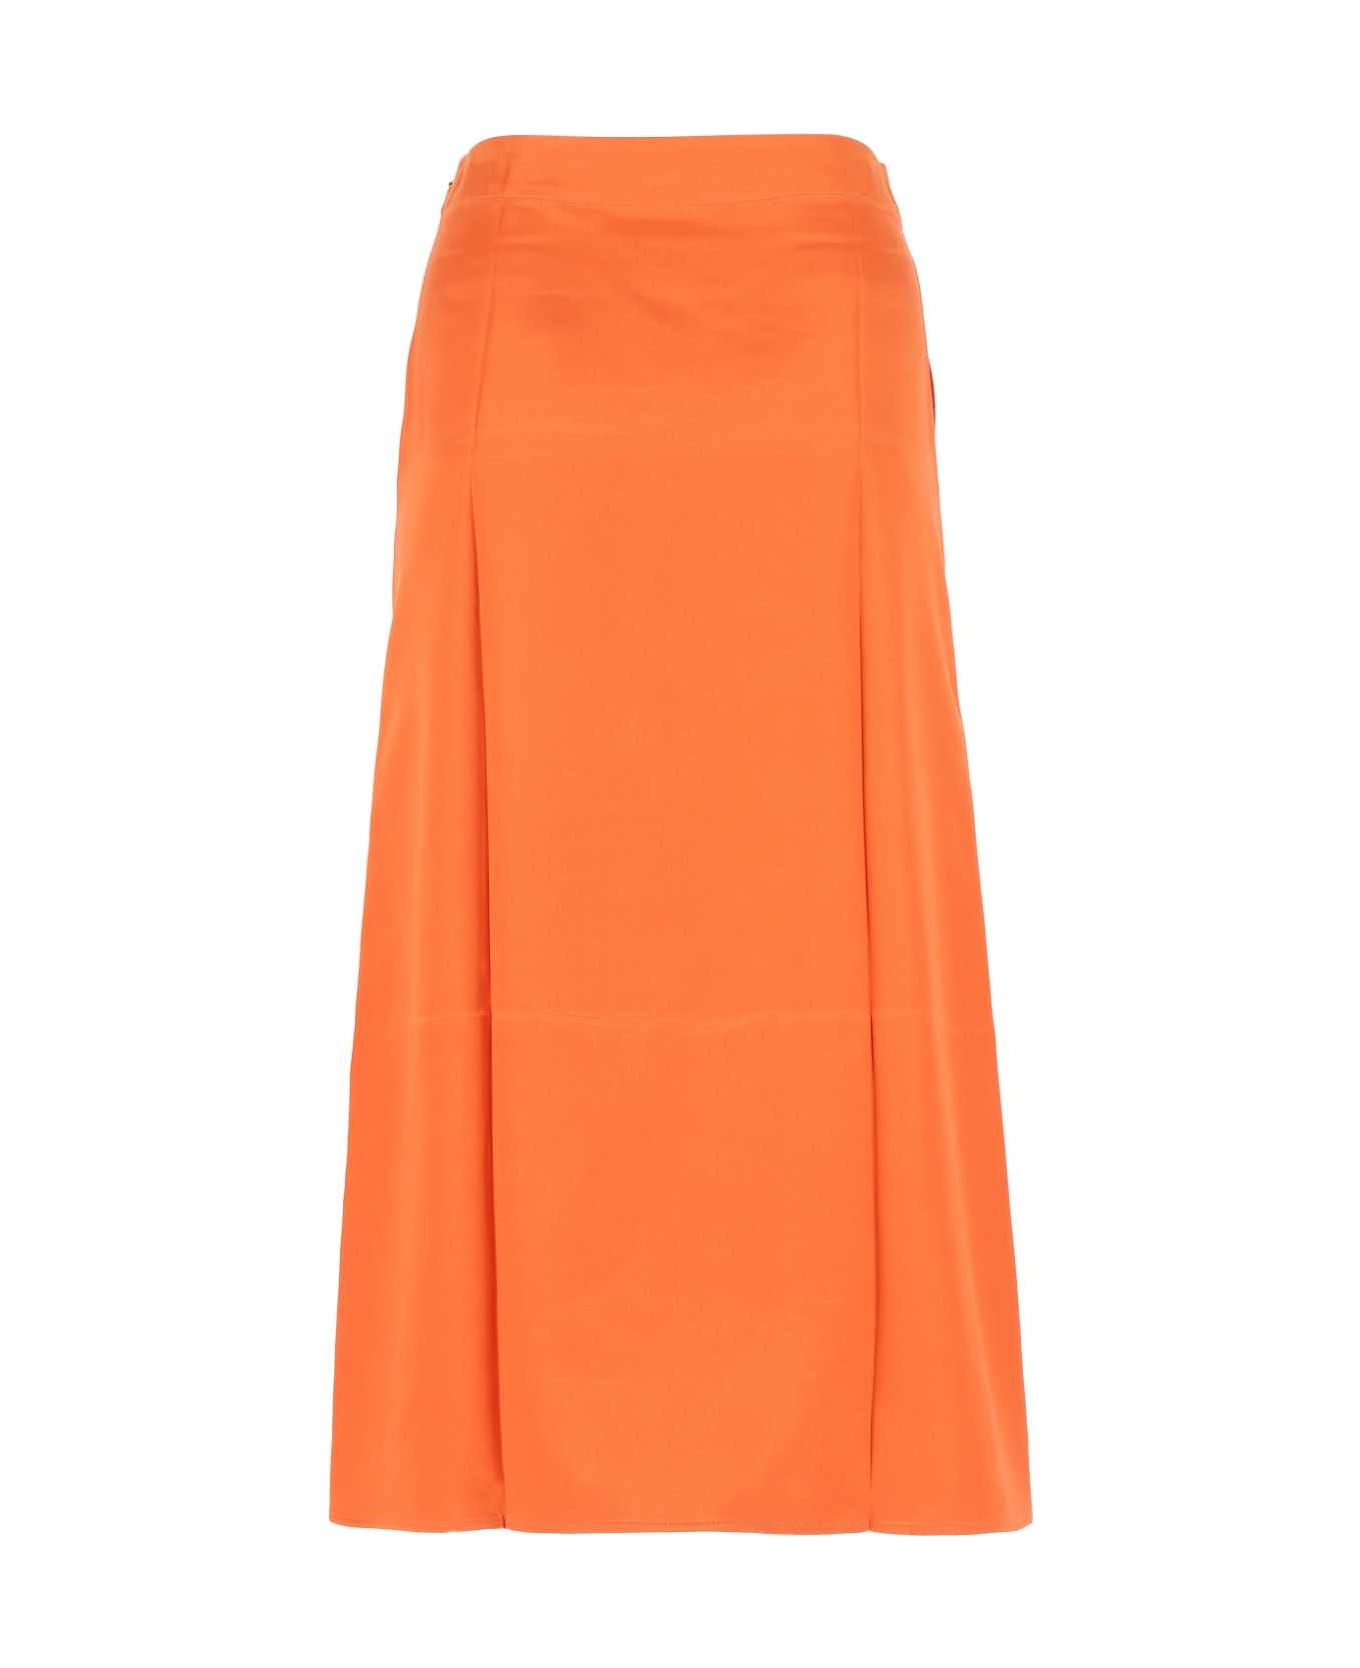 Loewe Orange Satin Skirt - BRIGHTORANGE